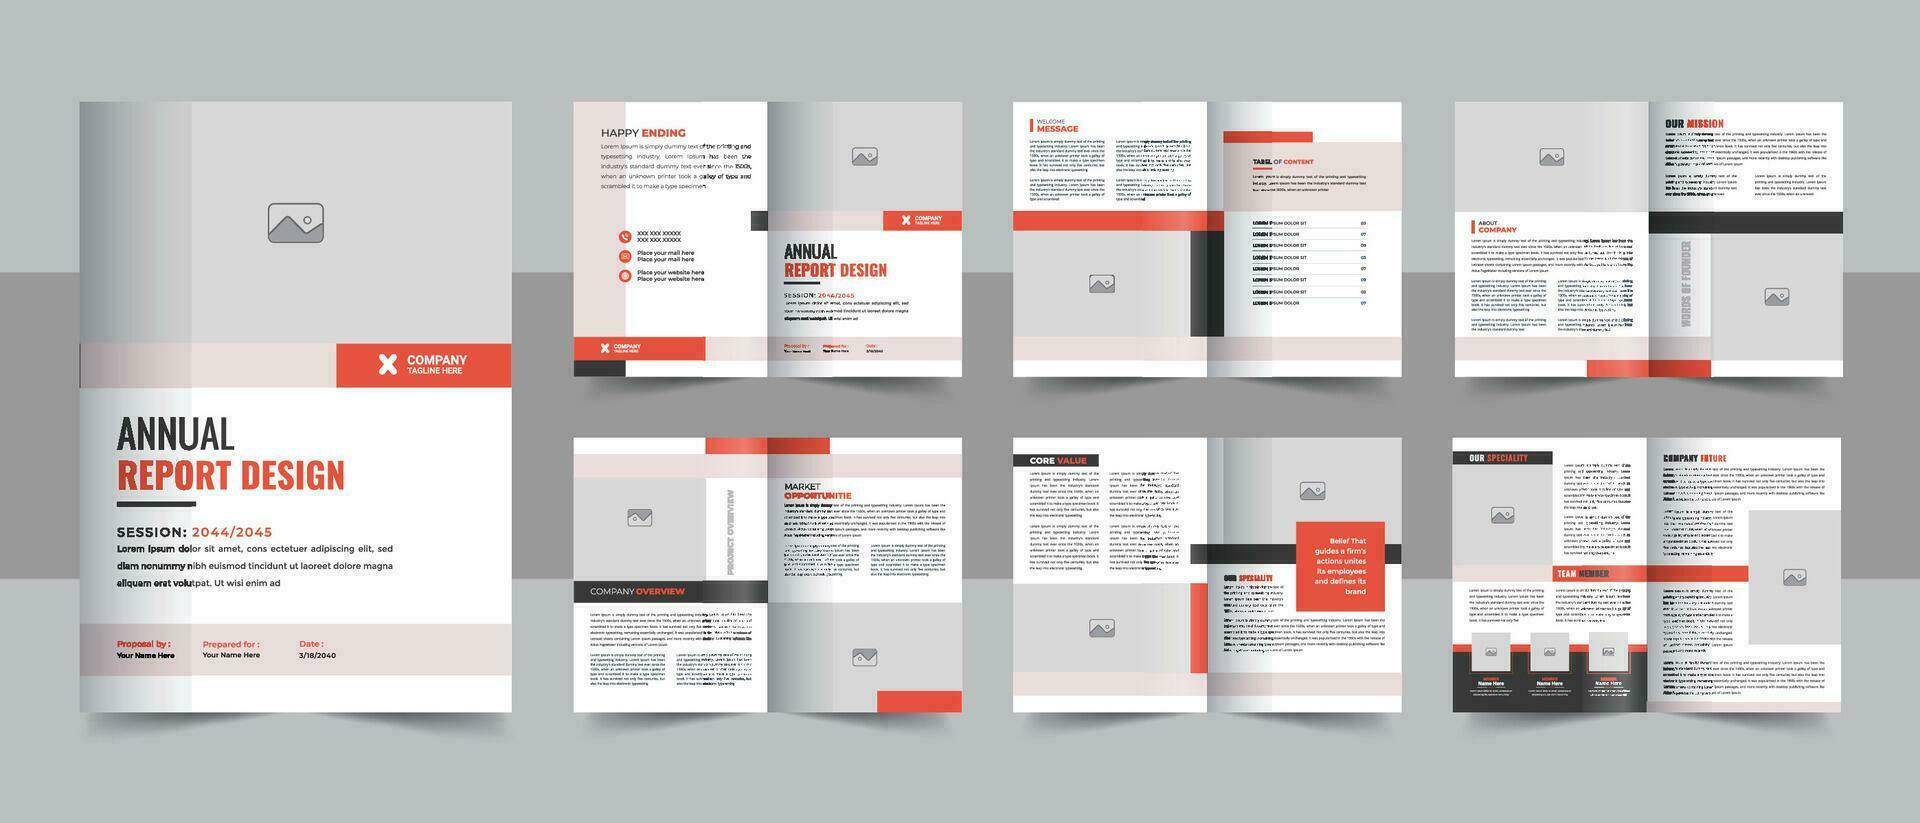 negocio folleto modelo o anual reporte diseño diseño para empresa perfil y corporativo folleto diseño vector